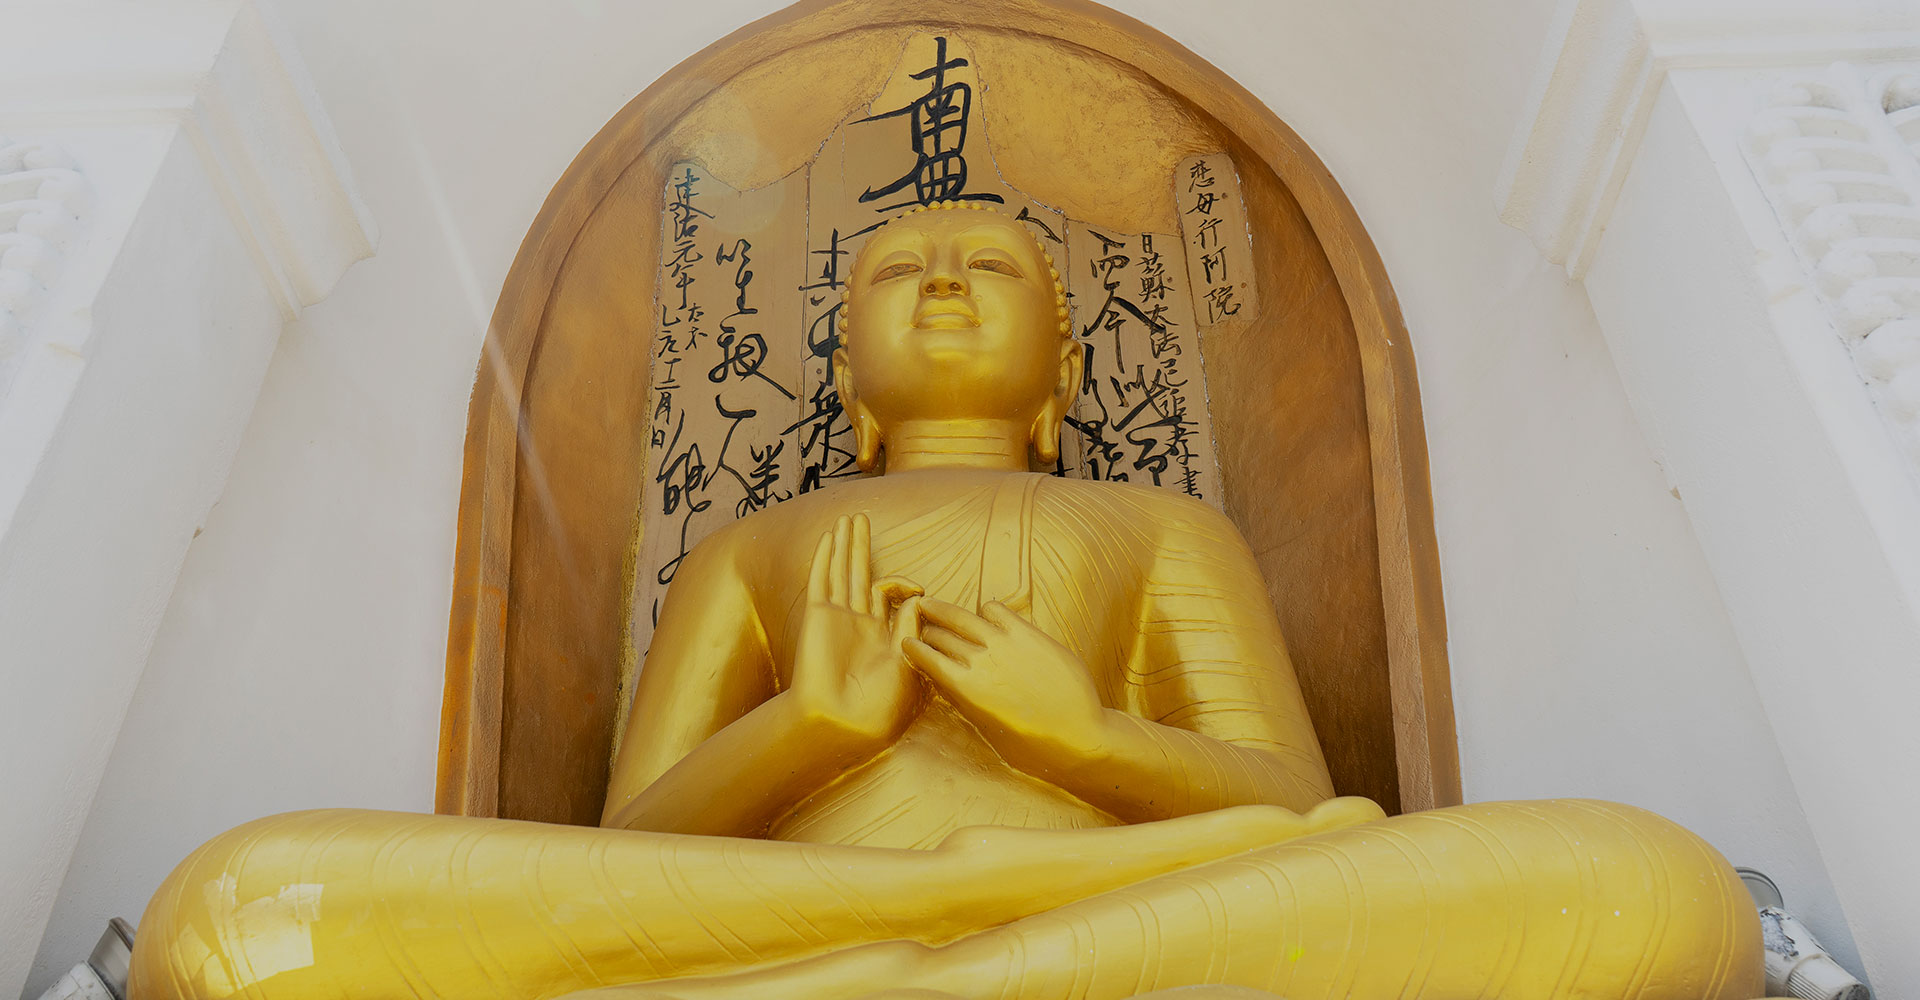 Monumental statue of Lord Buddha at Japanese Peace pagoda